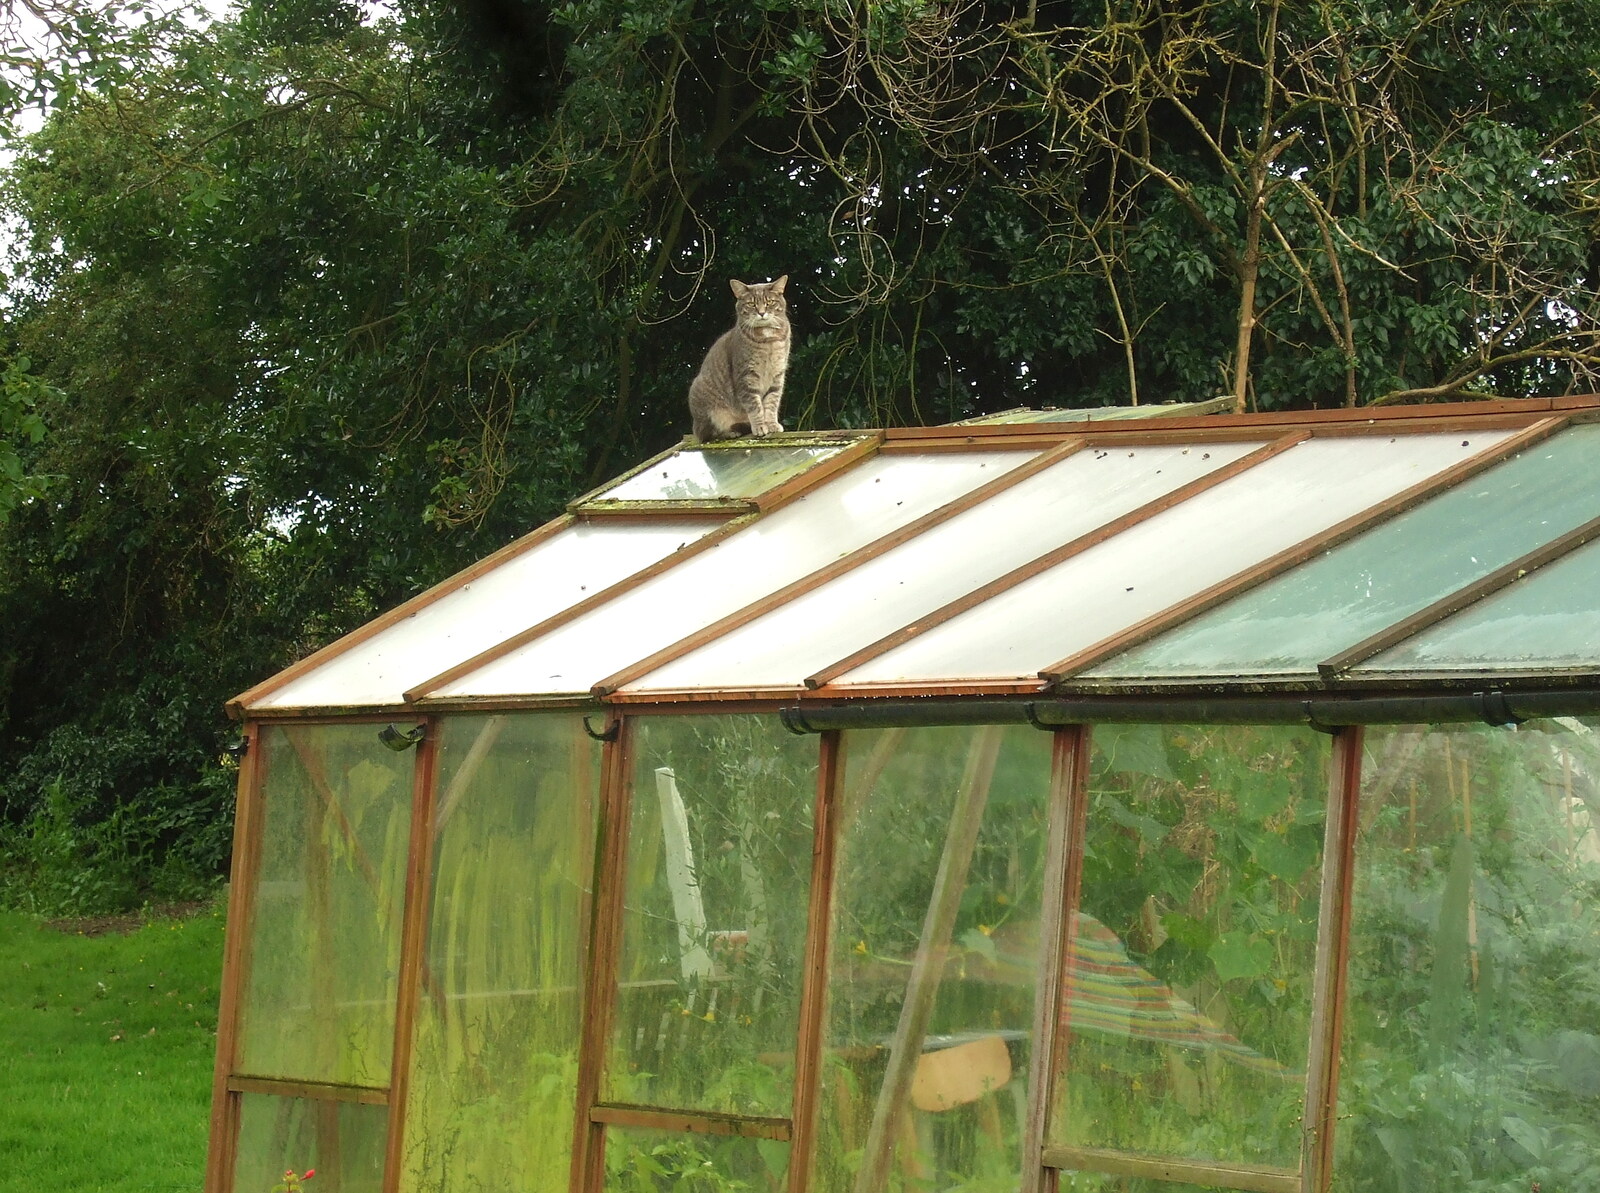 Boris - Stripey Cat - perches on the greenhouse from The Cambridge Folk Festival, Cherry Hinton, Cambridge - 28th July 2012